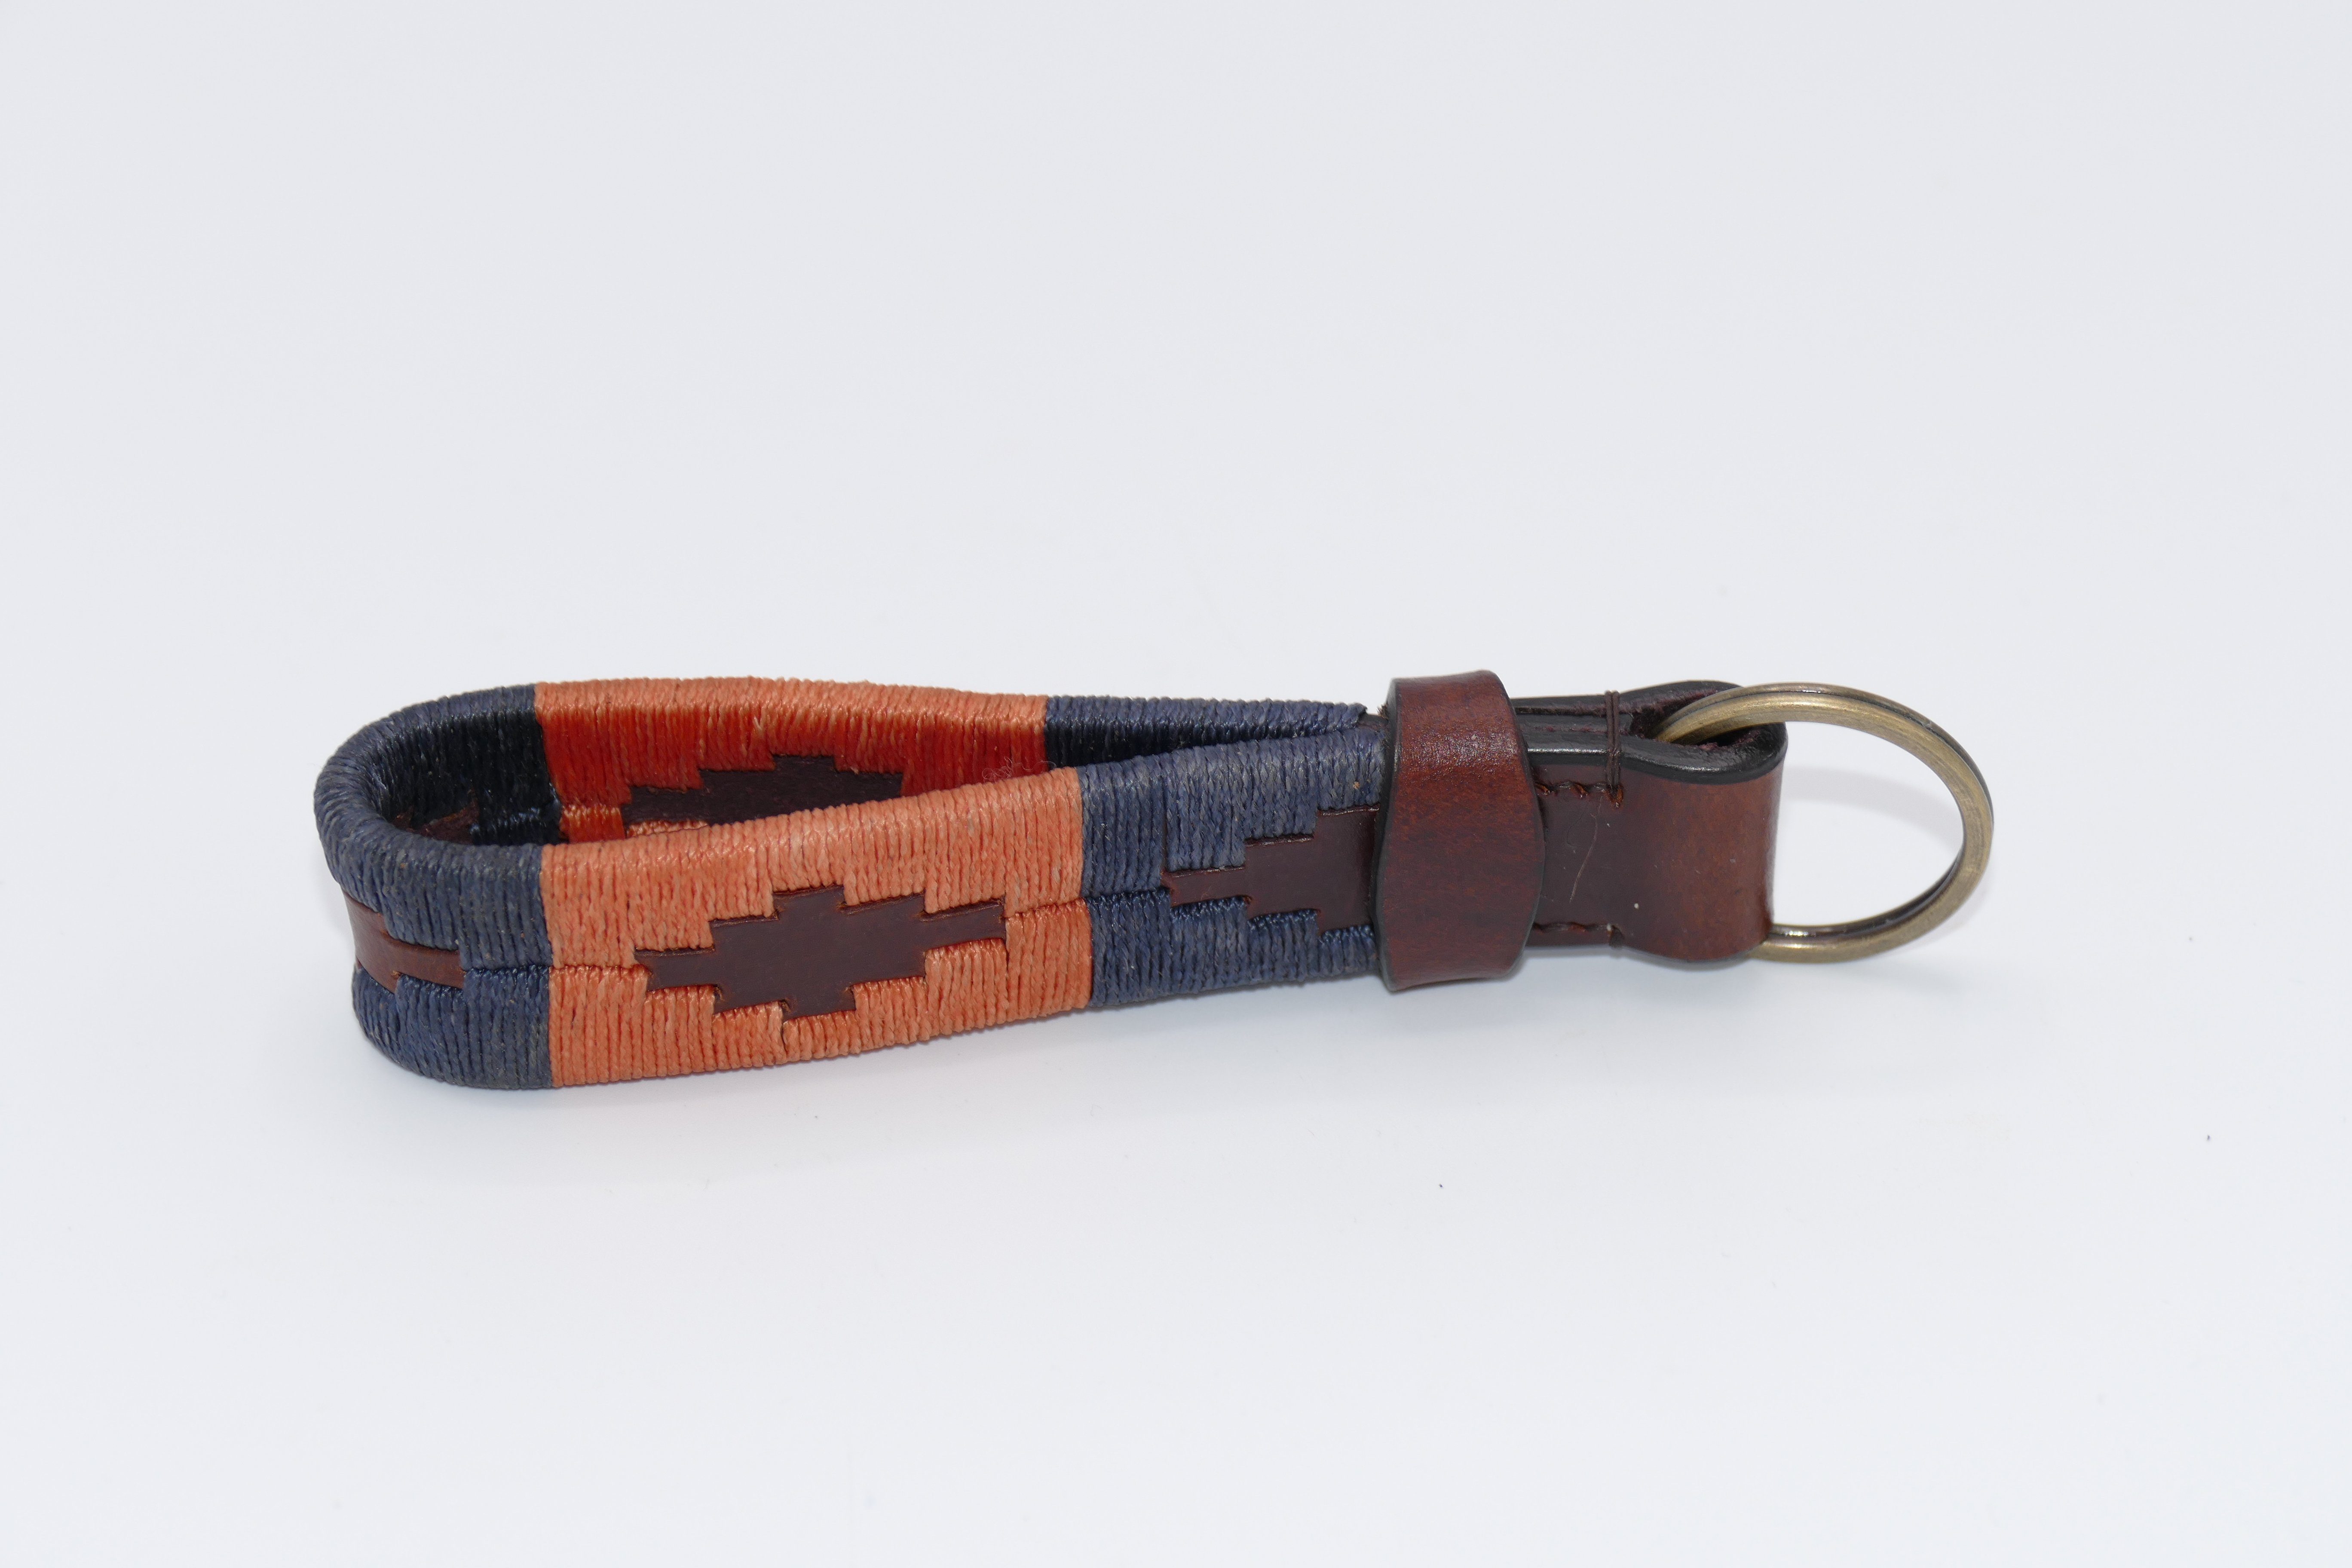 Kipita Schlüsselanhänger Hochwertig bestickter Polo Schlüsselanhänger, Argentinisches Design, echtes Leder, echtes Leder Lively